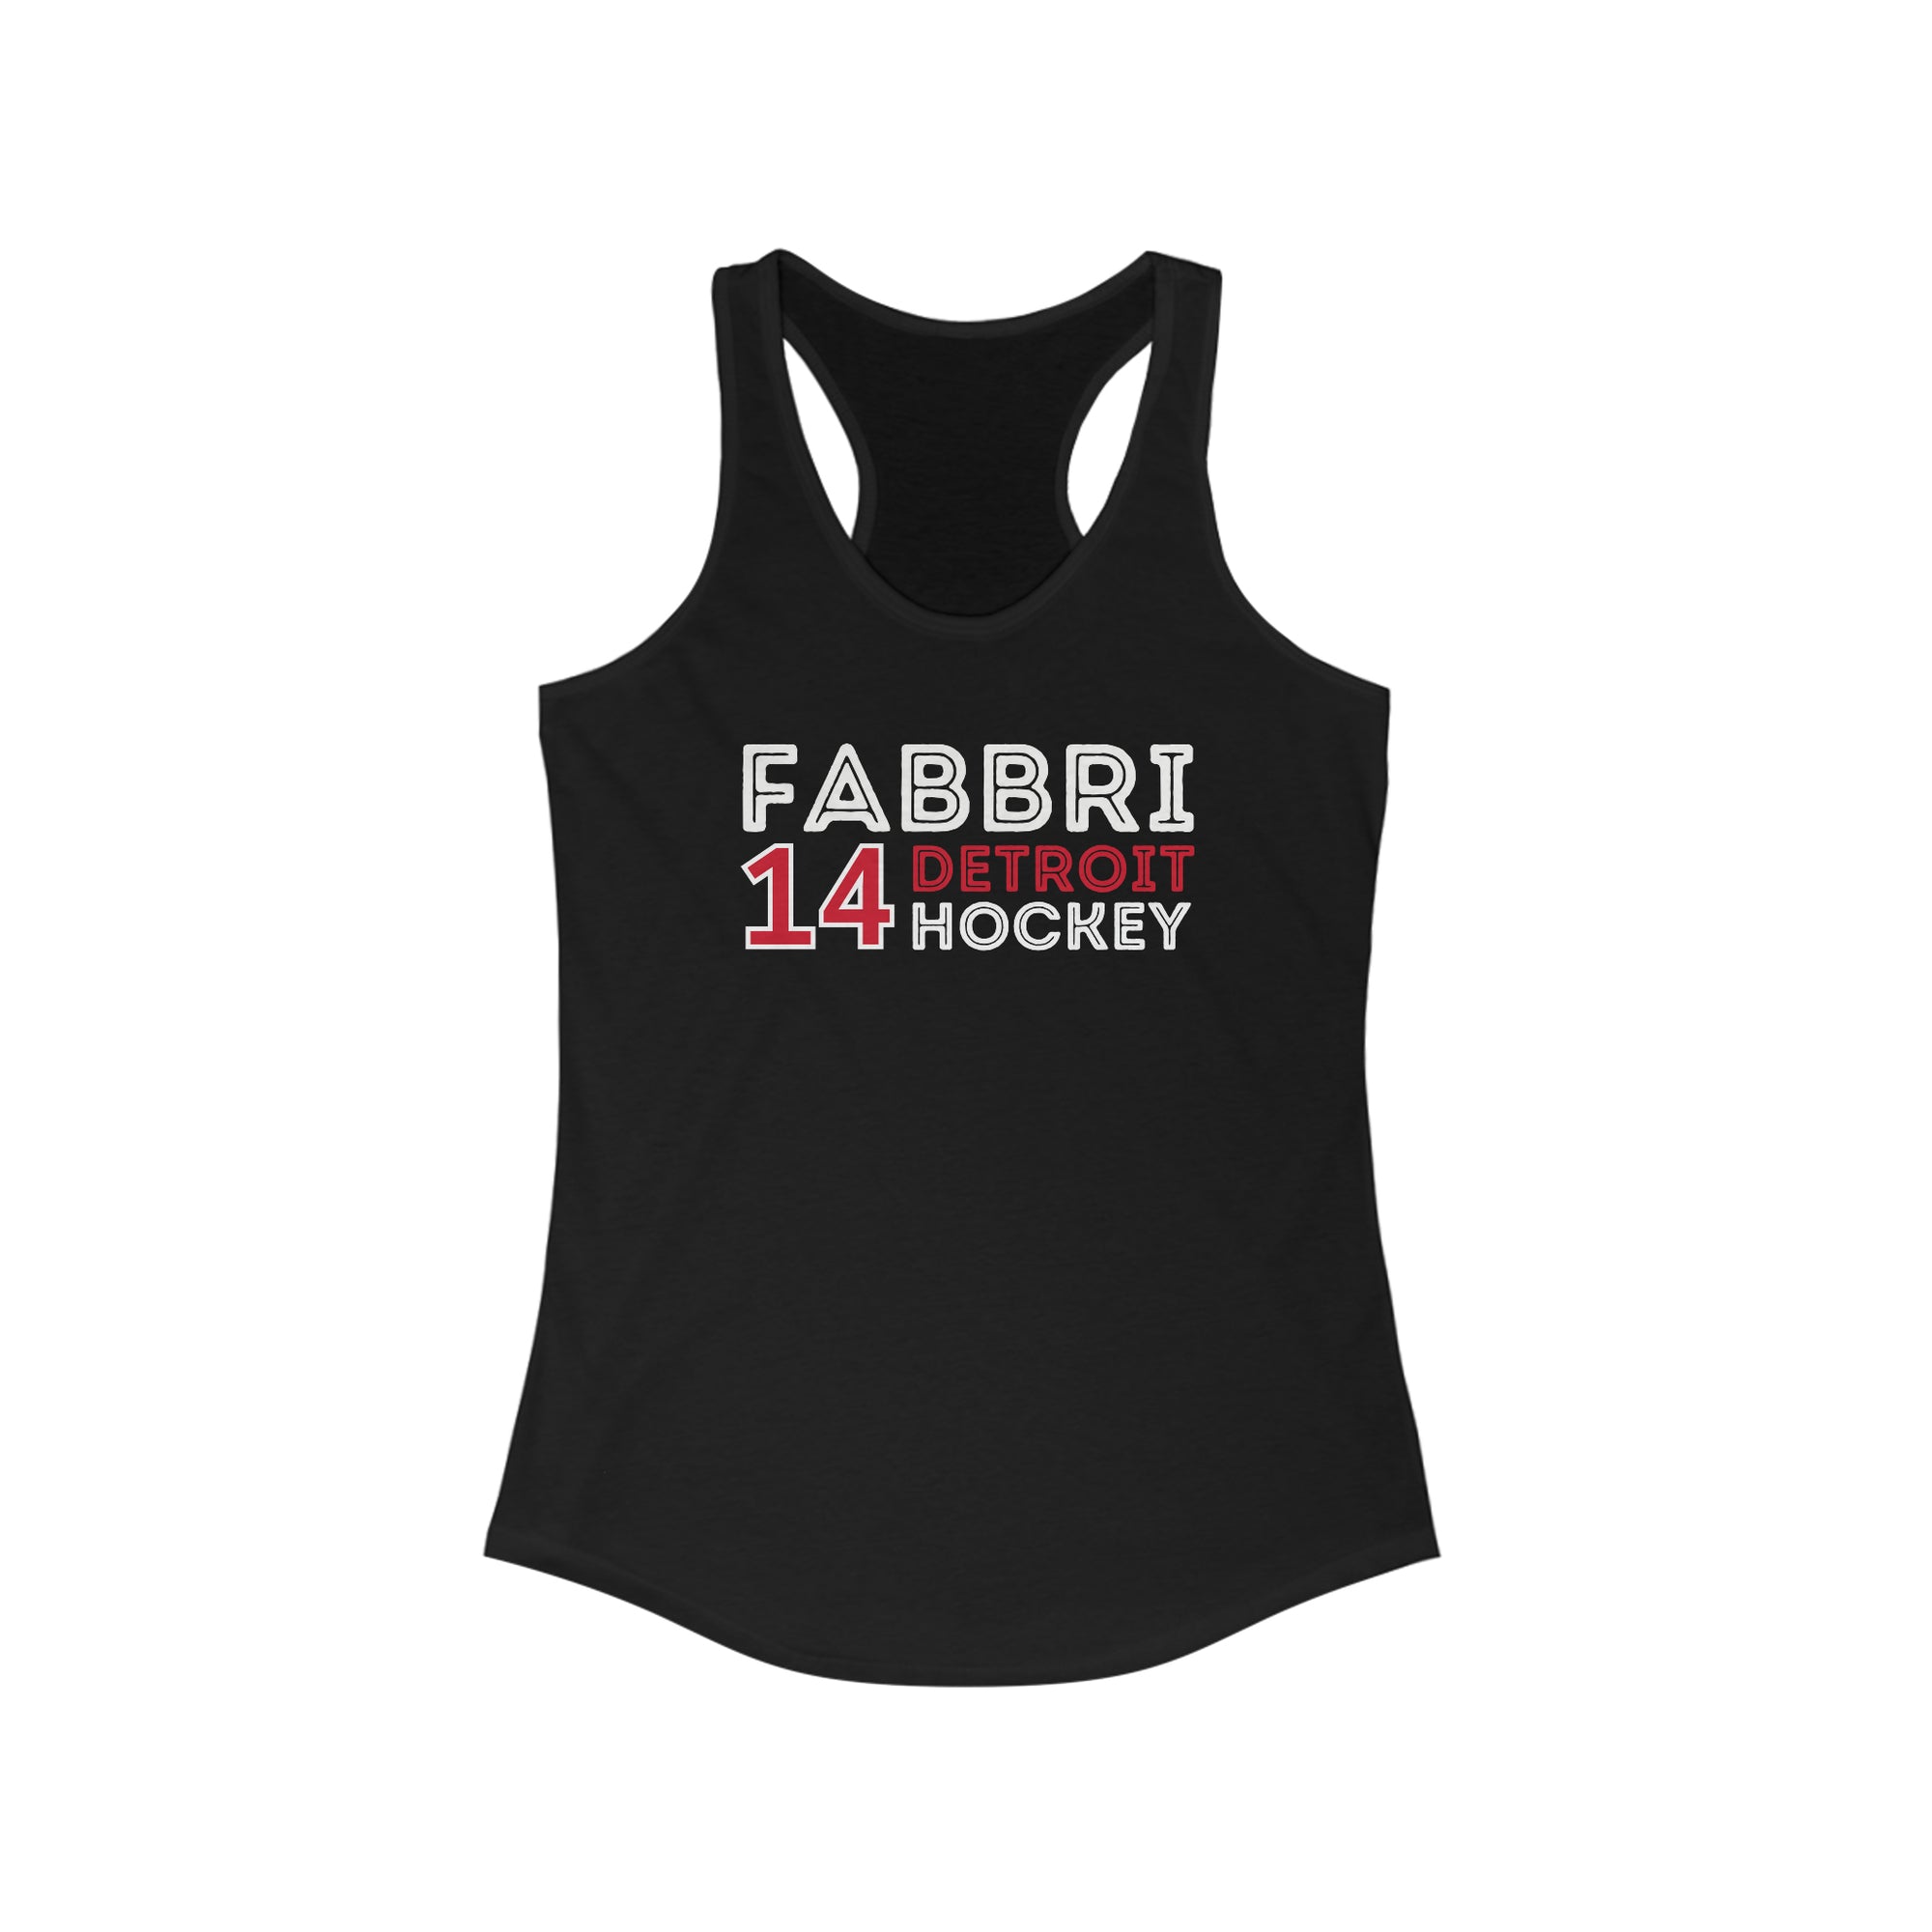 Fabbri 14 Detroit Hockey Grafitti Wall Design Women's Ideal Racerback Tank Top